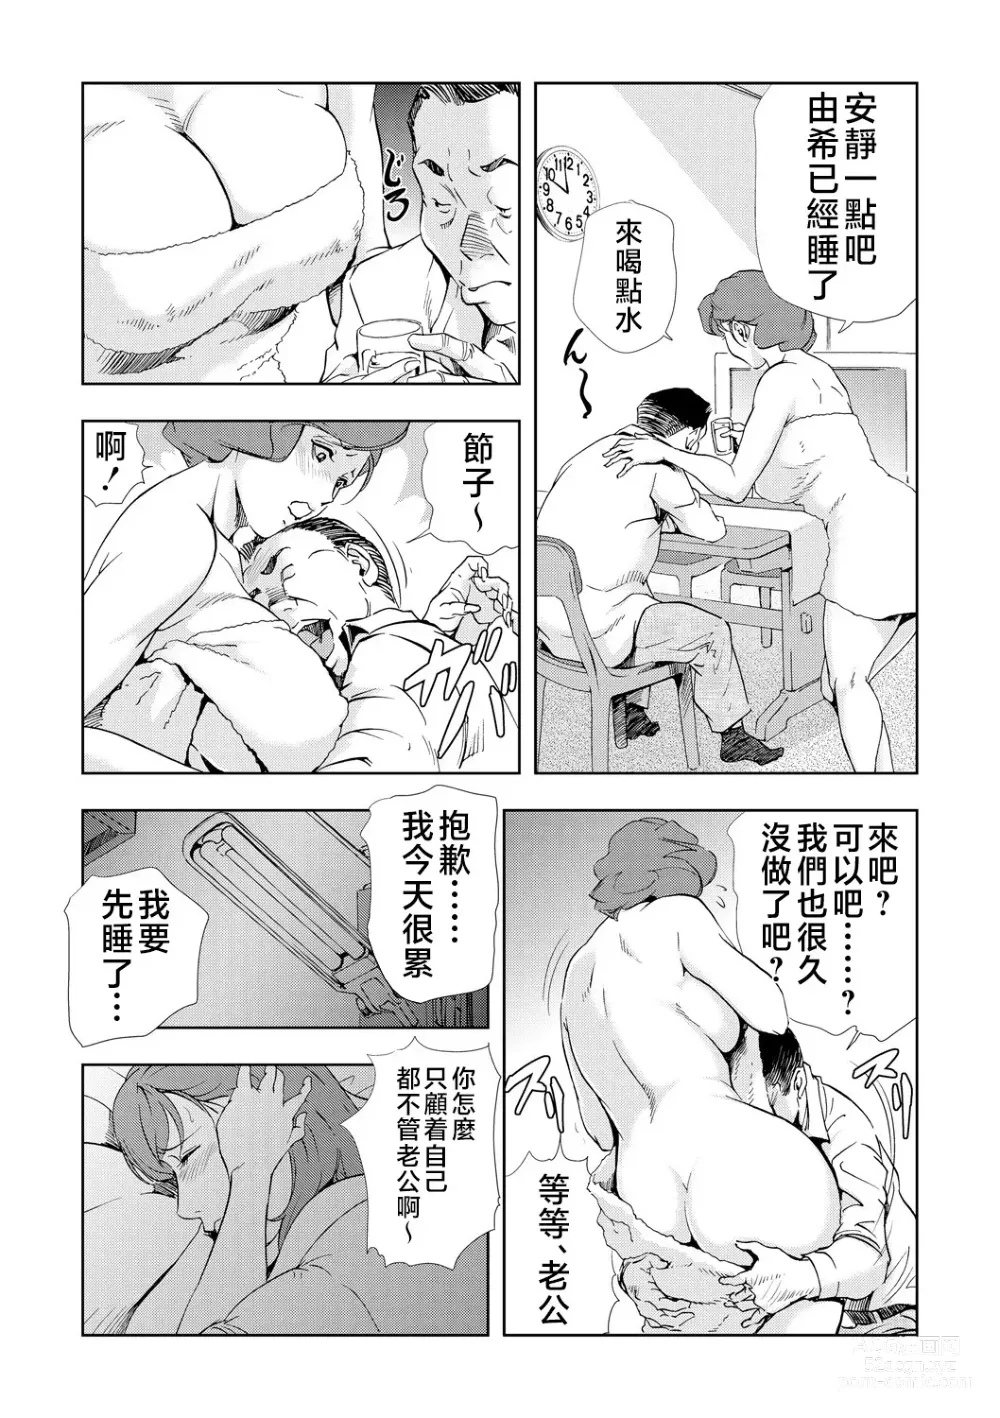 Page 12 of manga Netorare Vol.06